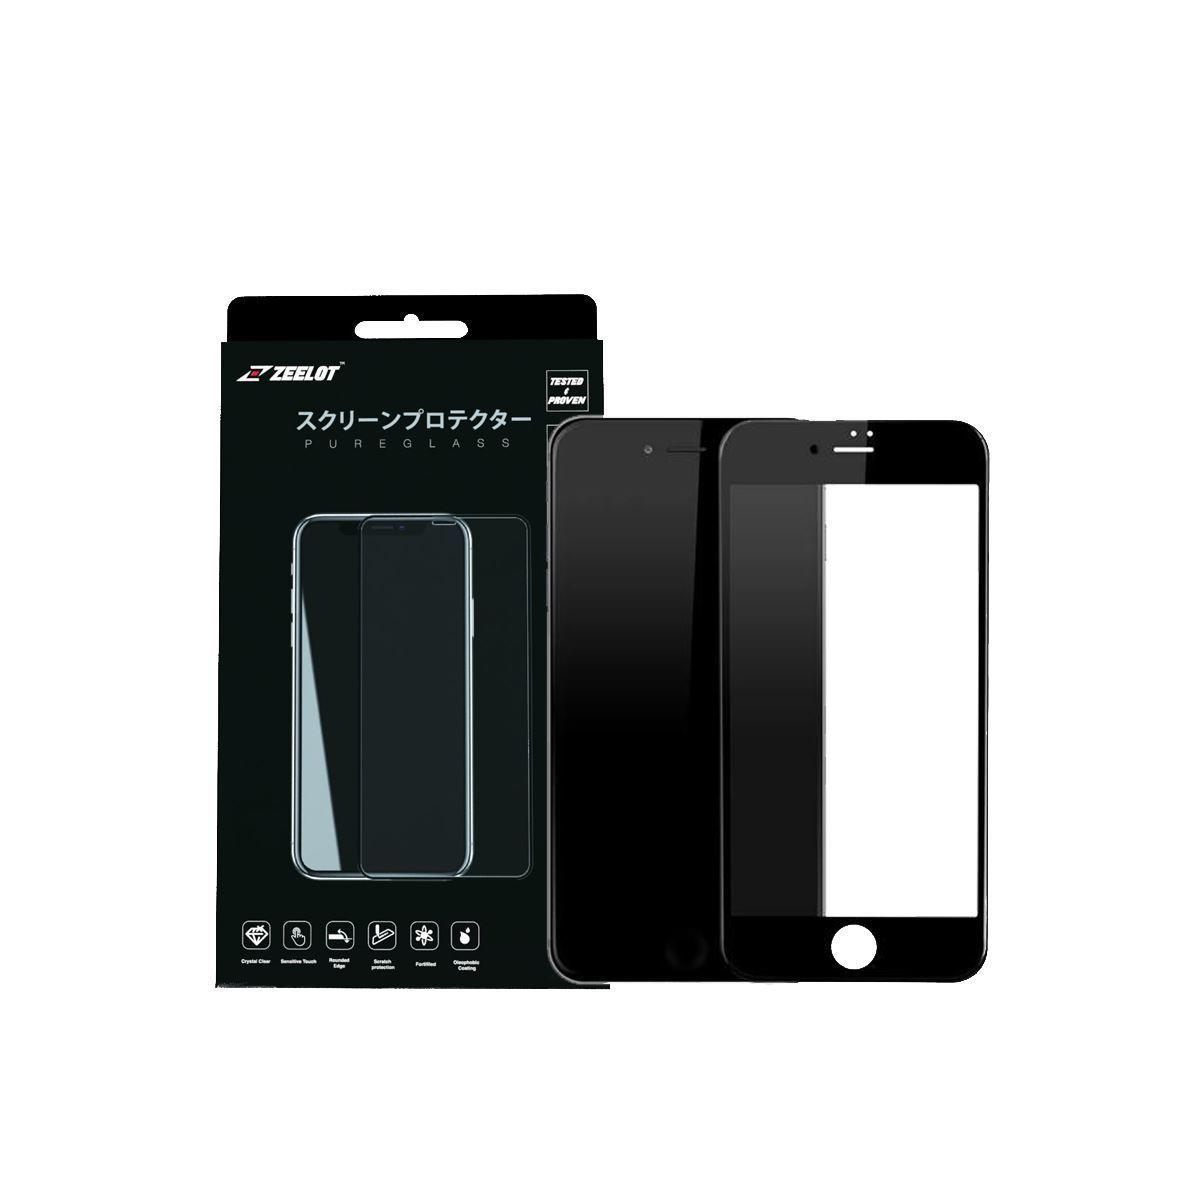 ZEELOT PureGlass 2.5D Clear Tempered Glass Screen Protector for iPhone 8/7 4.7"(2017/2016), Black Tempered Glass Zeelot 